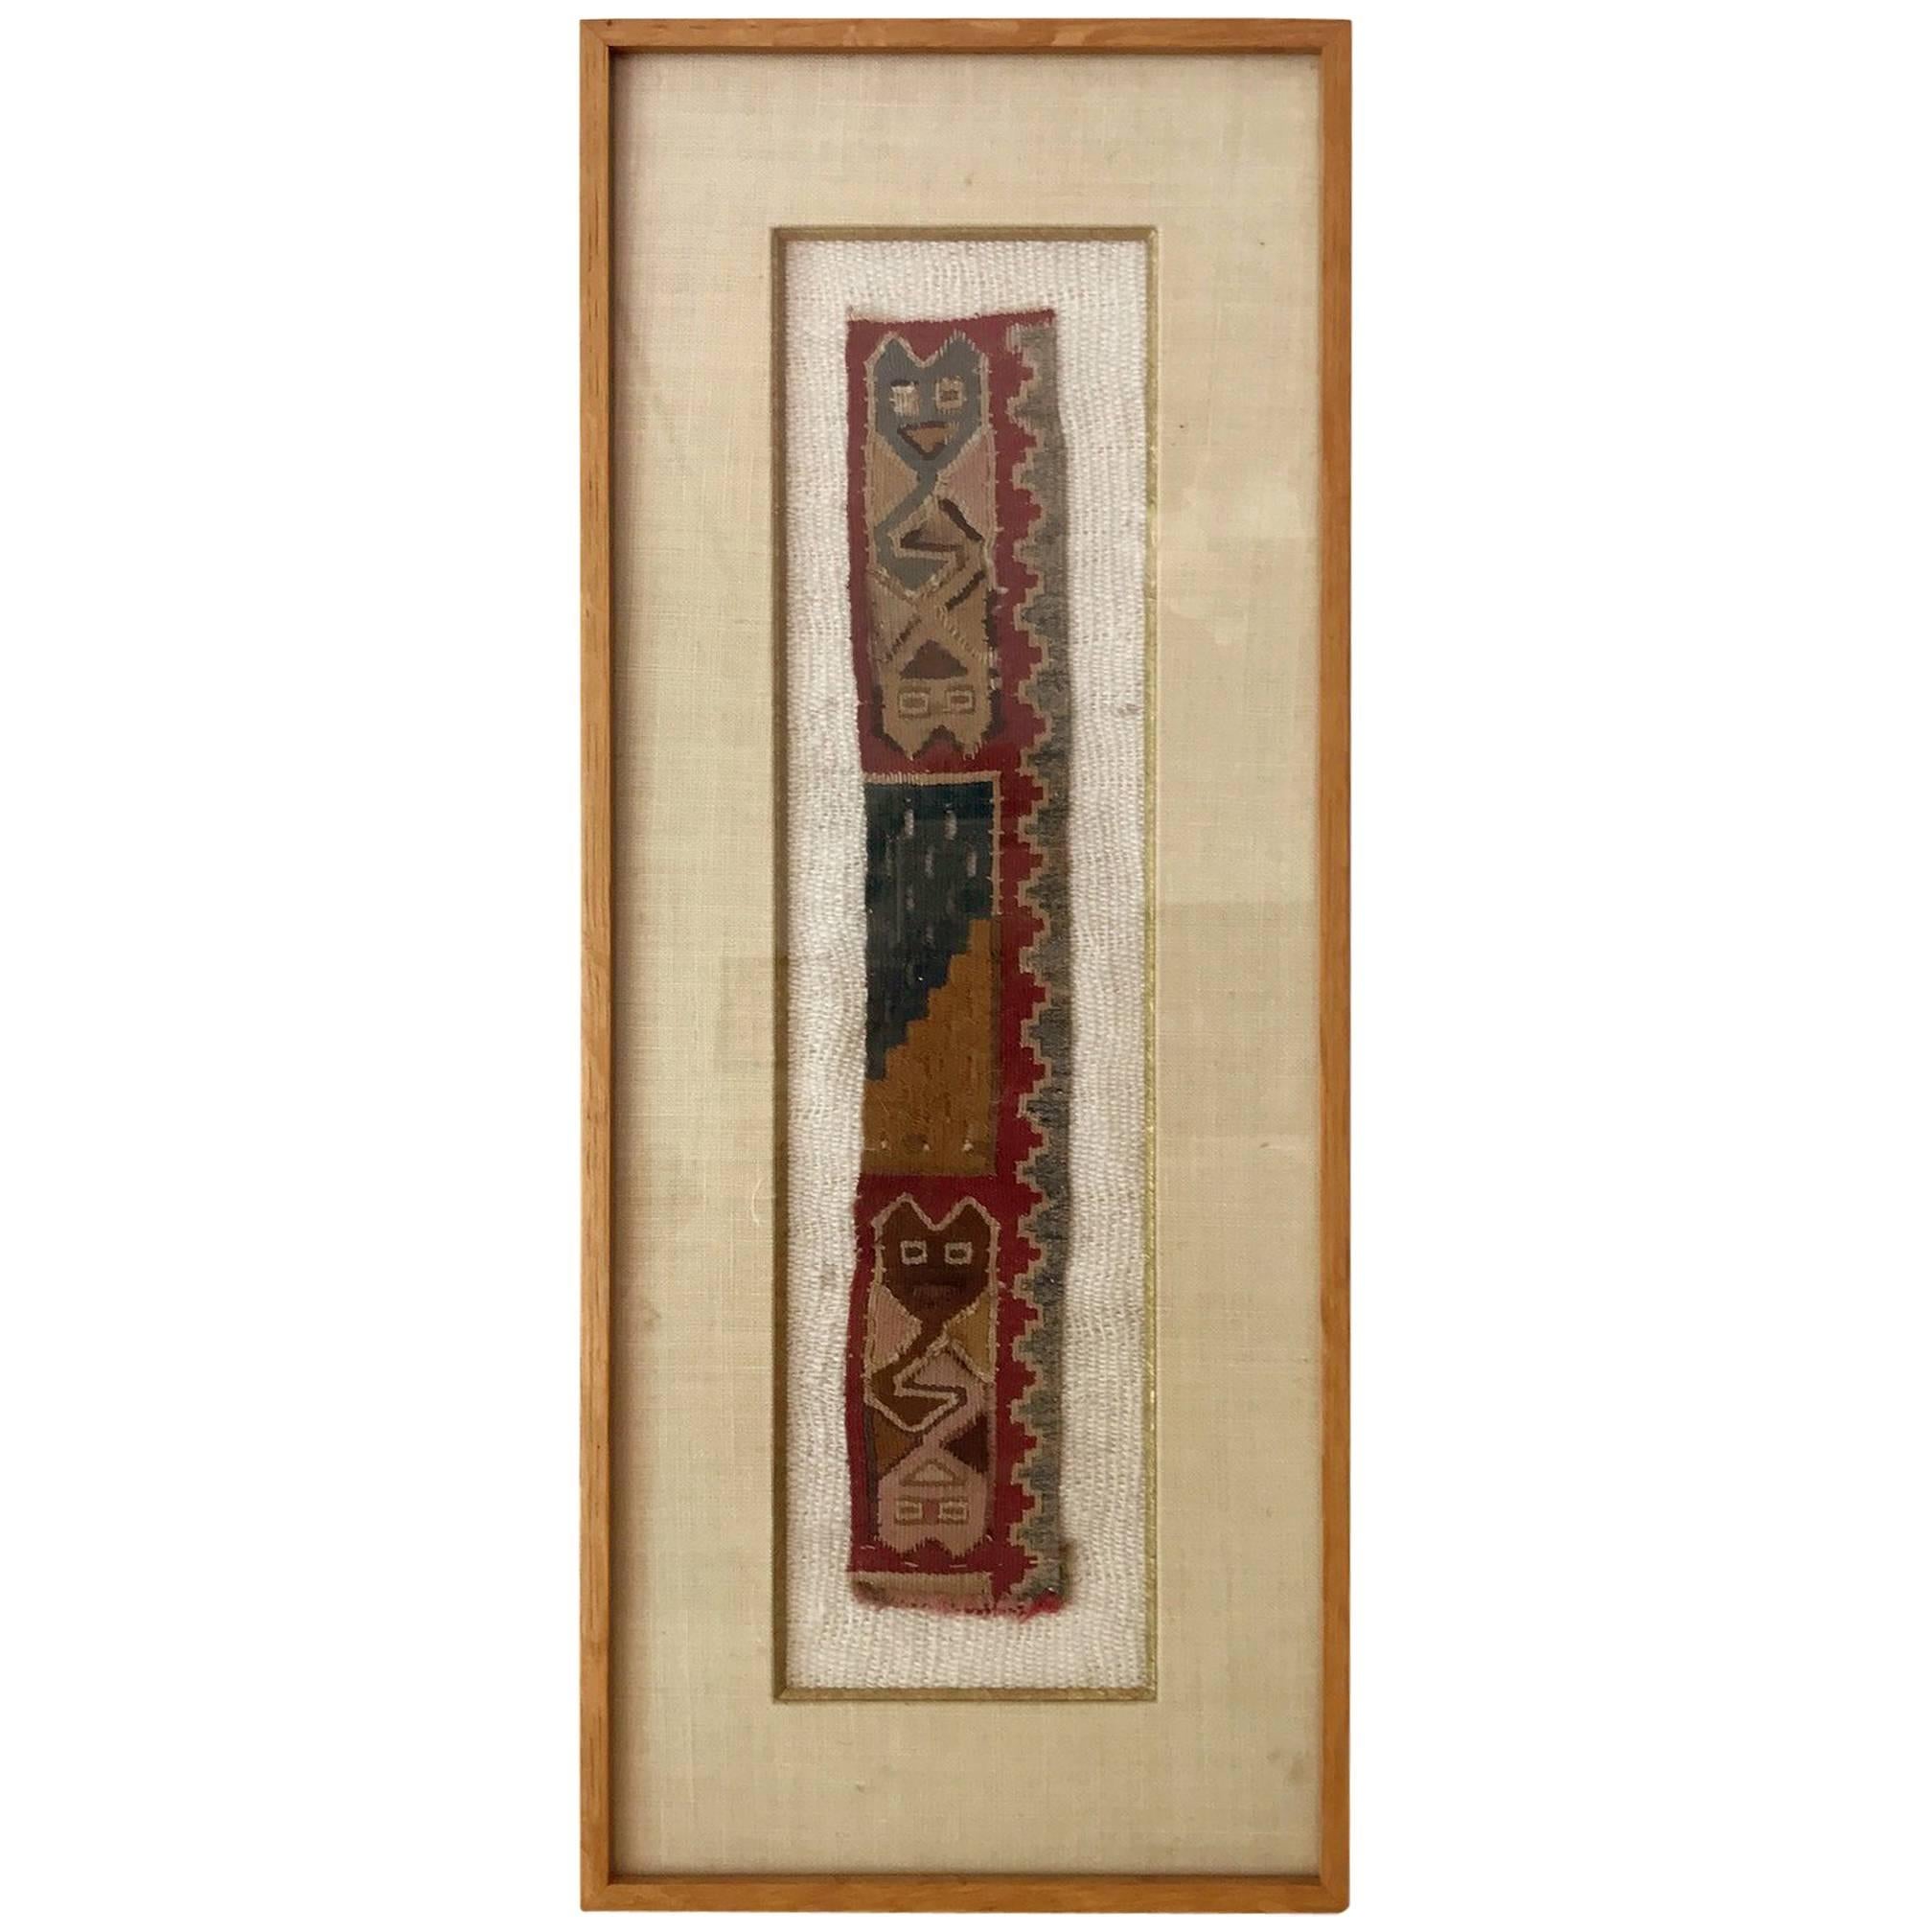 Framed Pre-Columbian Textile Fragment